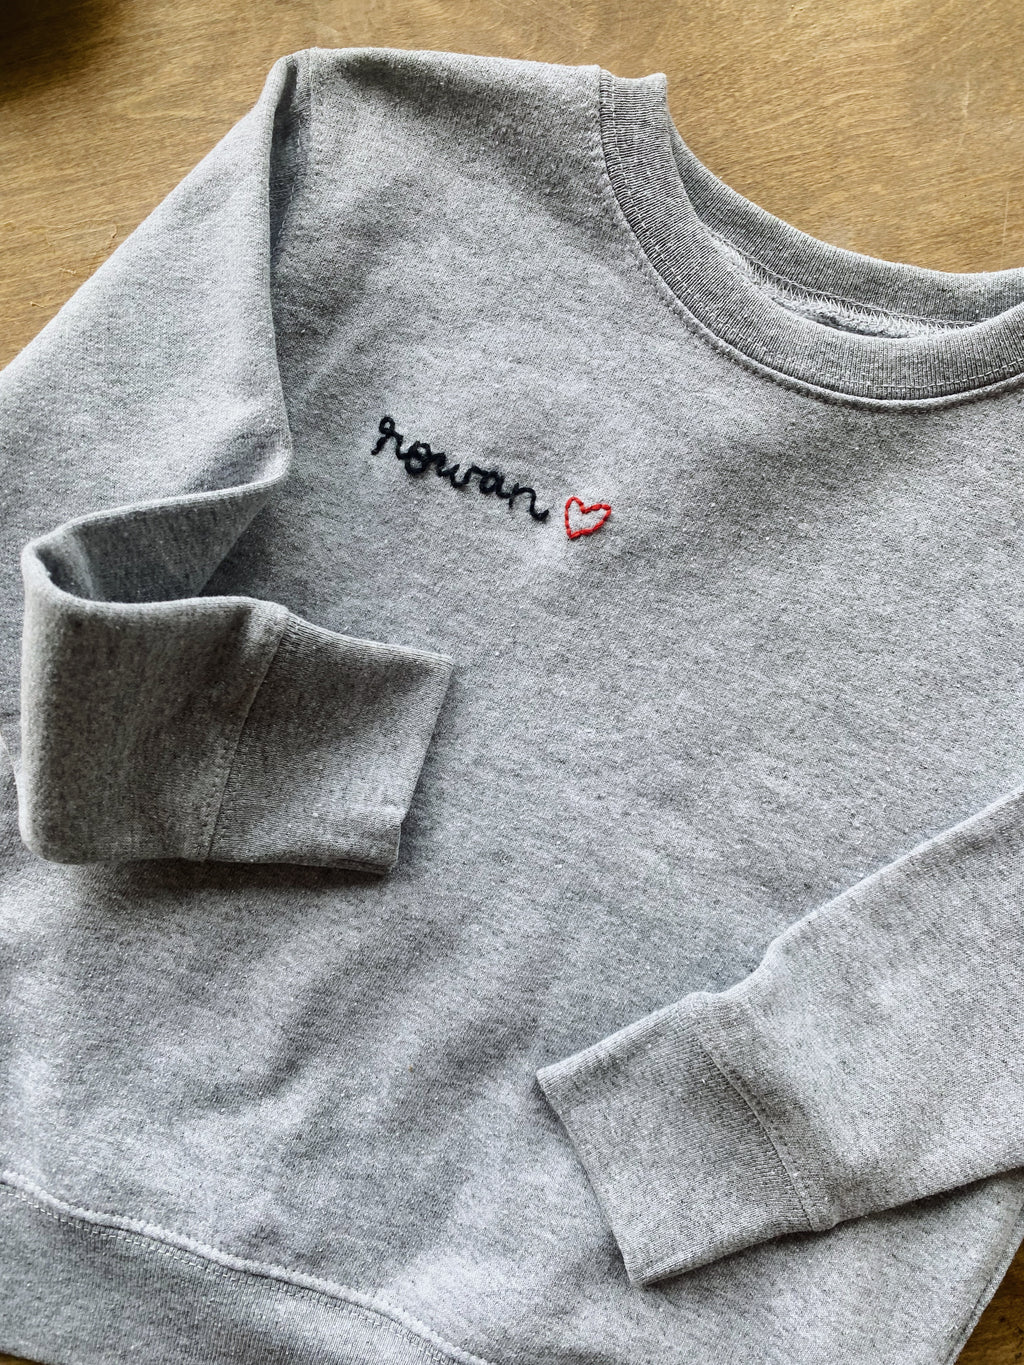 The Name + Heart Hand Stitched Sweatshirt